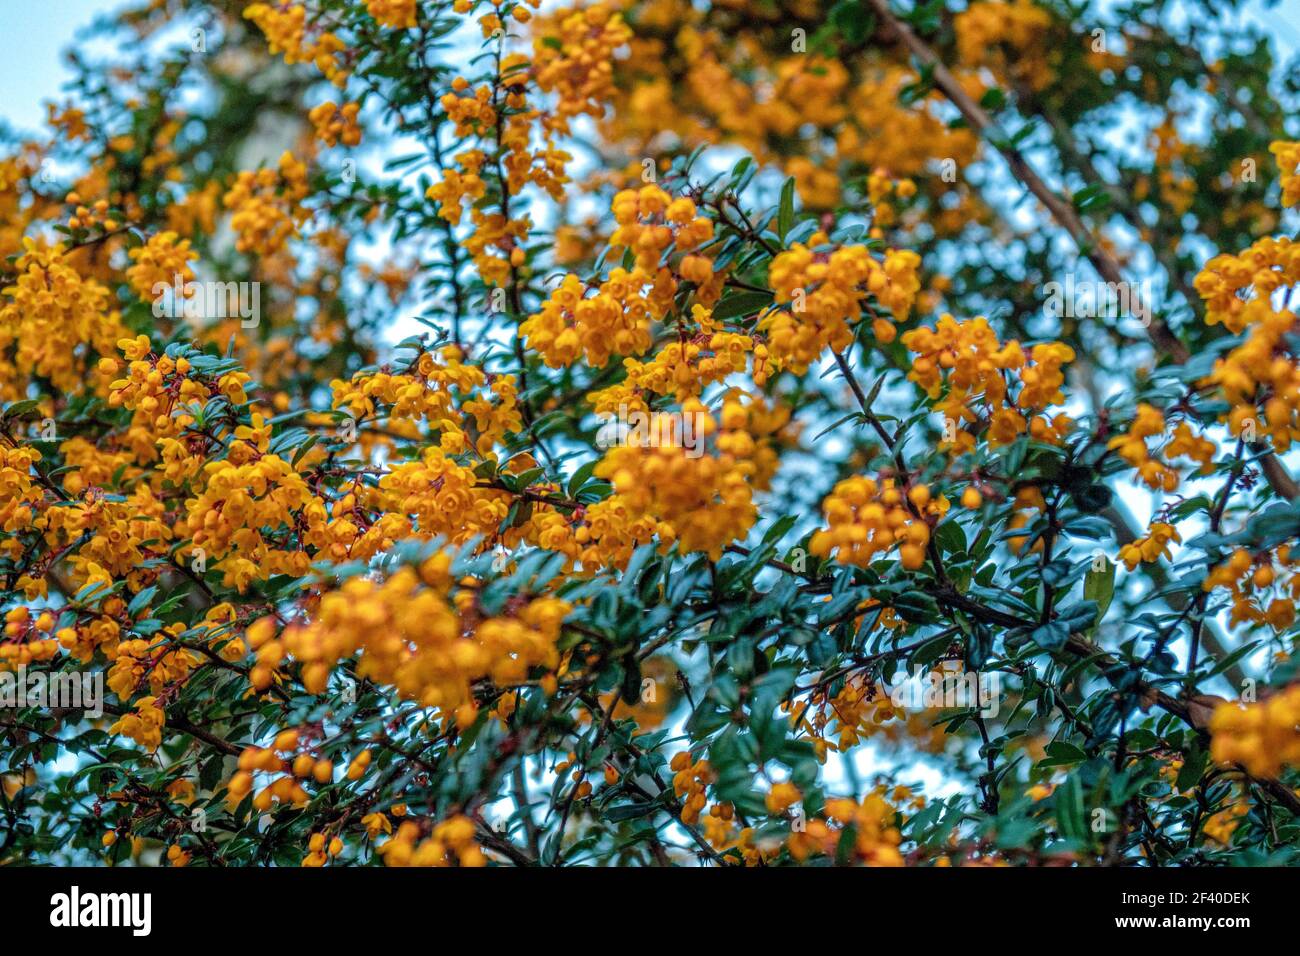 A Darwin’s barberry plant shrub with orange flowers Stock Photo